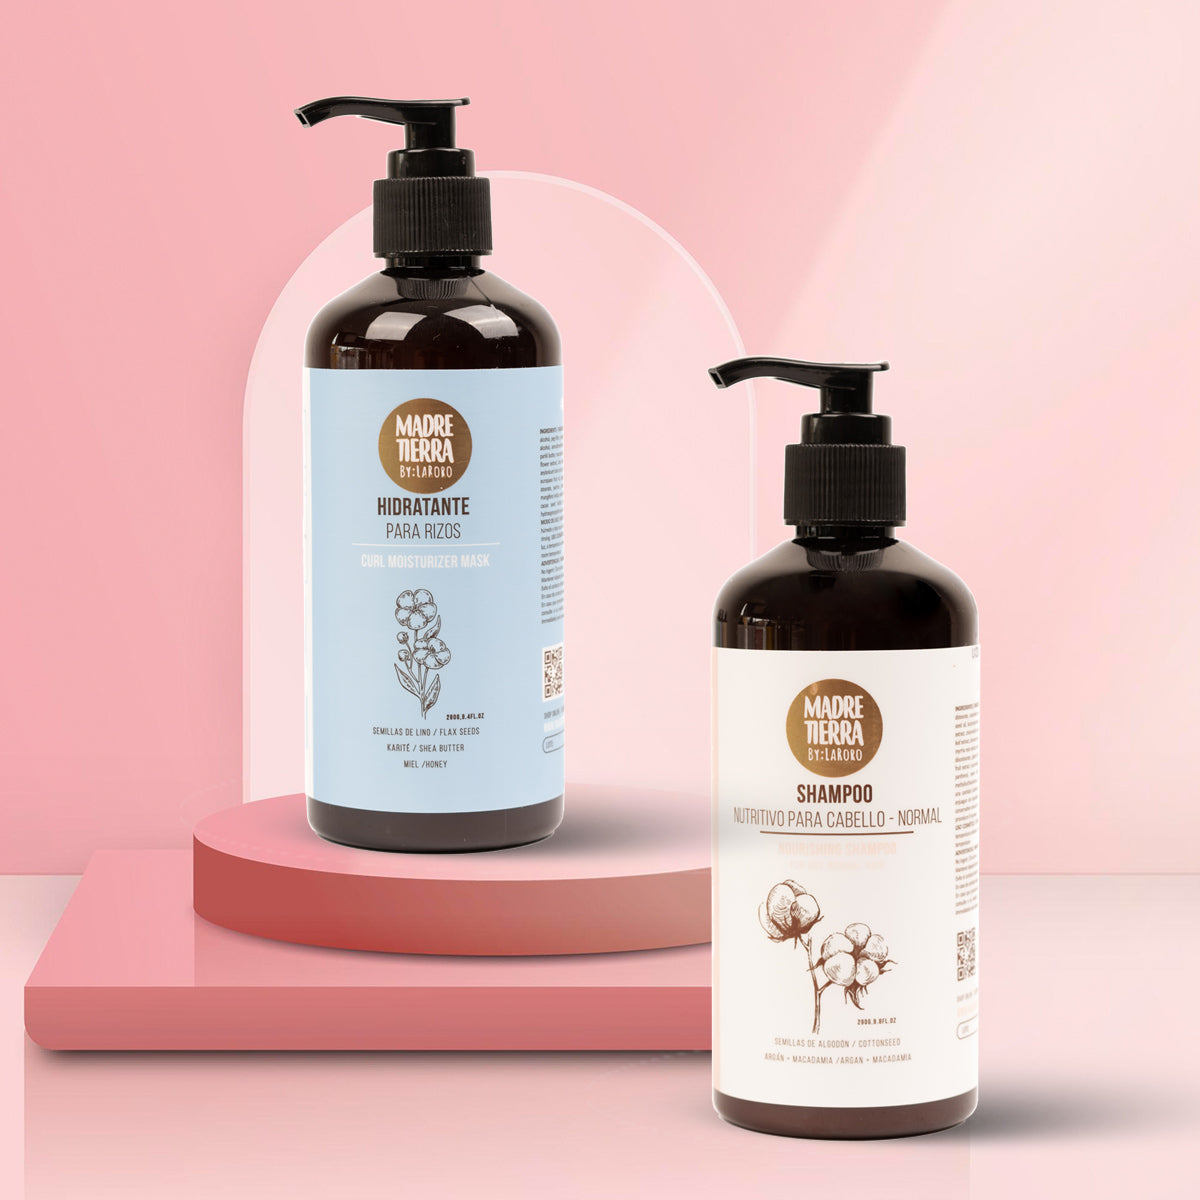 Shampoo Nutritivo para cabello seco + Hidratante para rizos - Madre Tierra Oficial